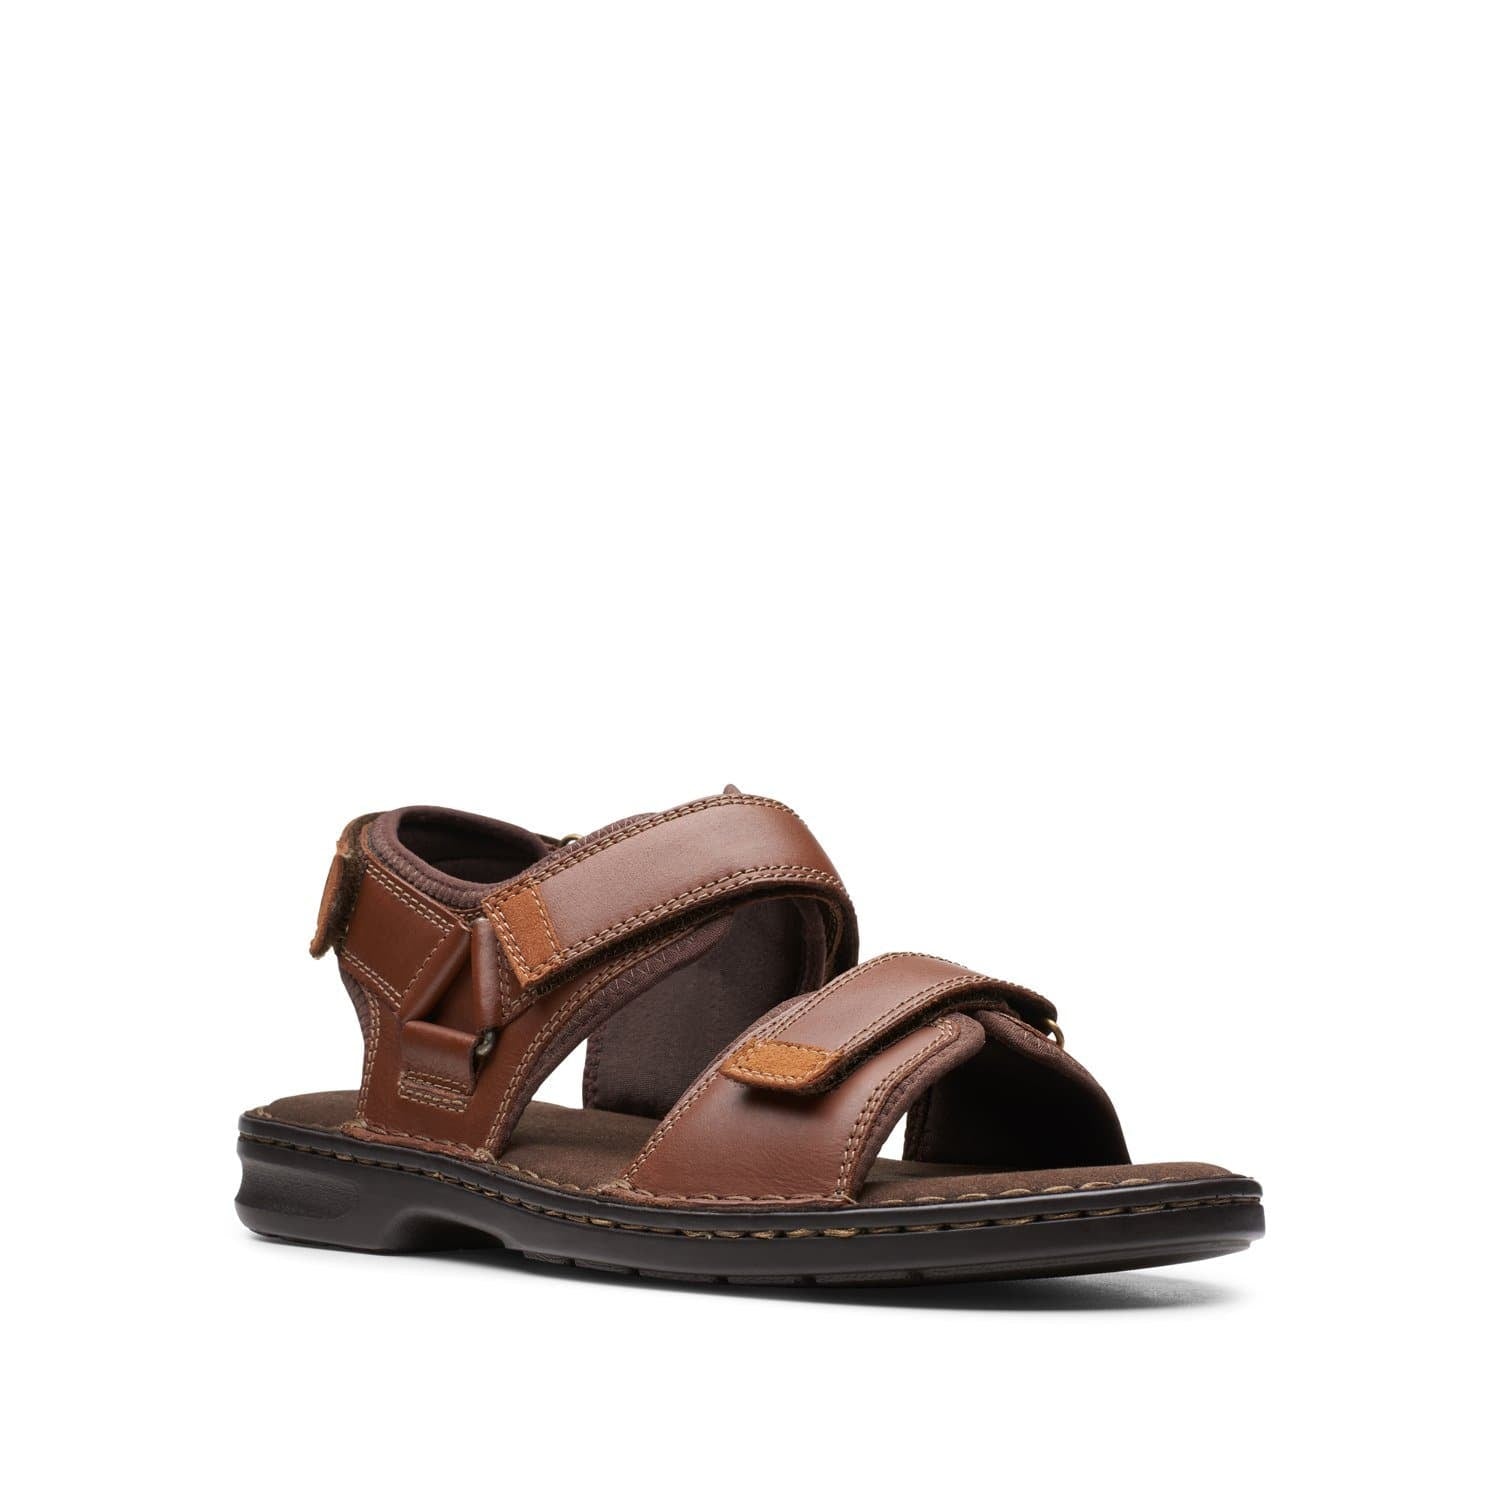 Clarks-Malone-Shore-Men's-Sandals-Tan-Leather-26148104